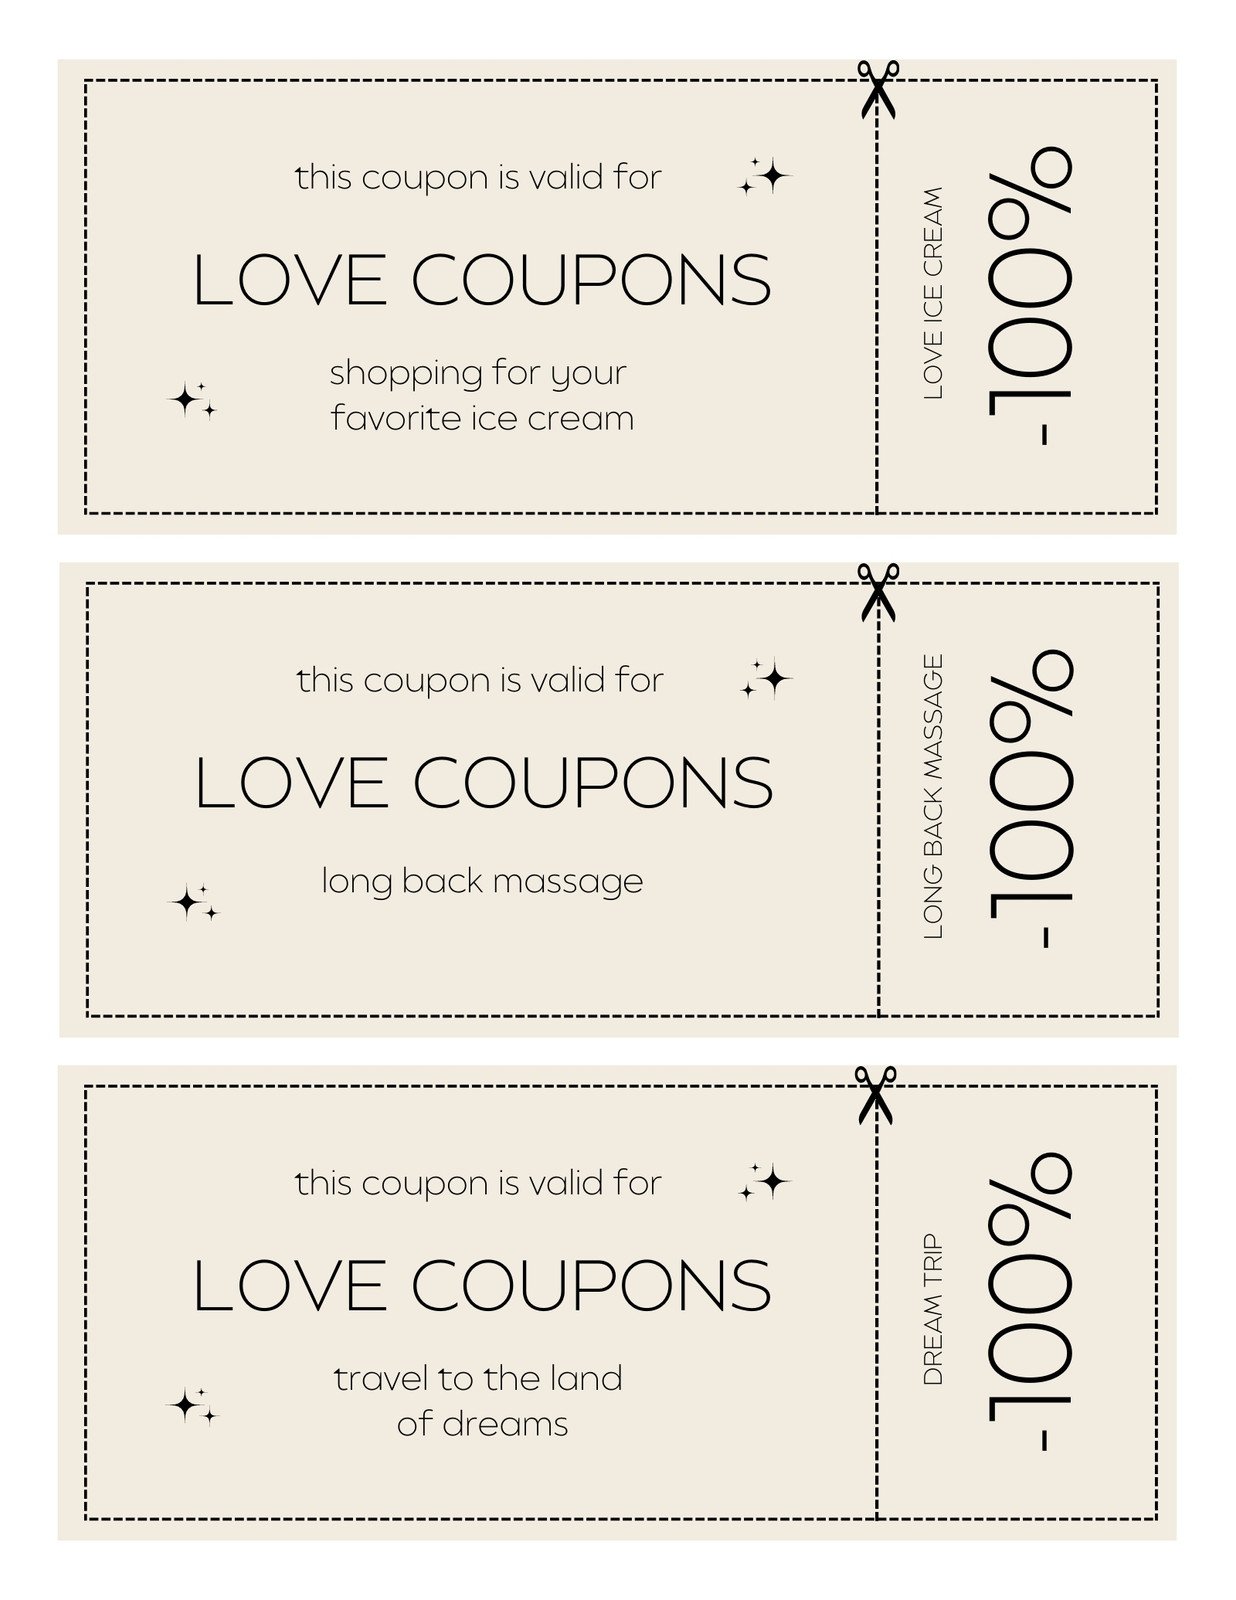 Free sample coupons